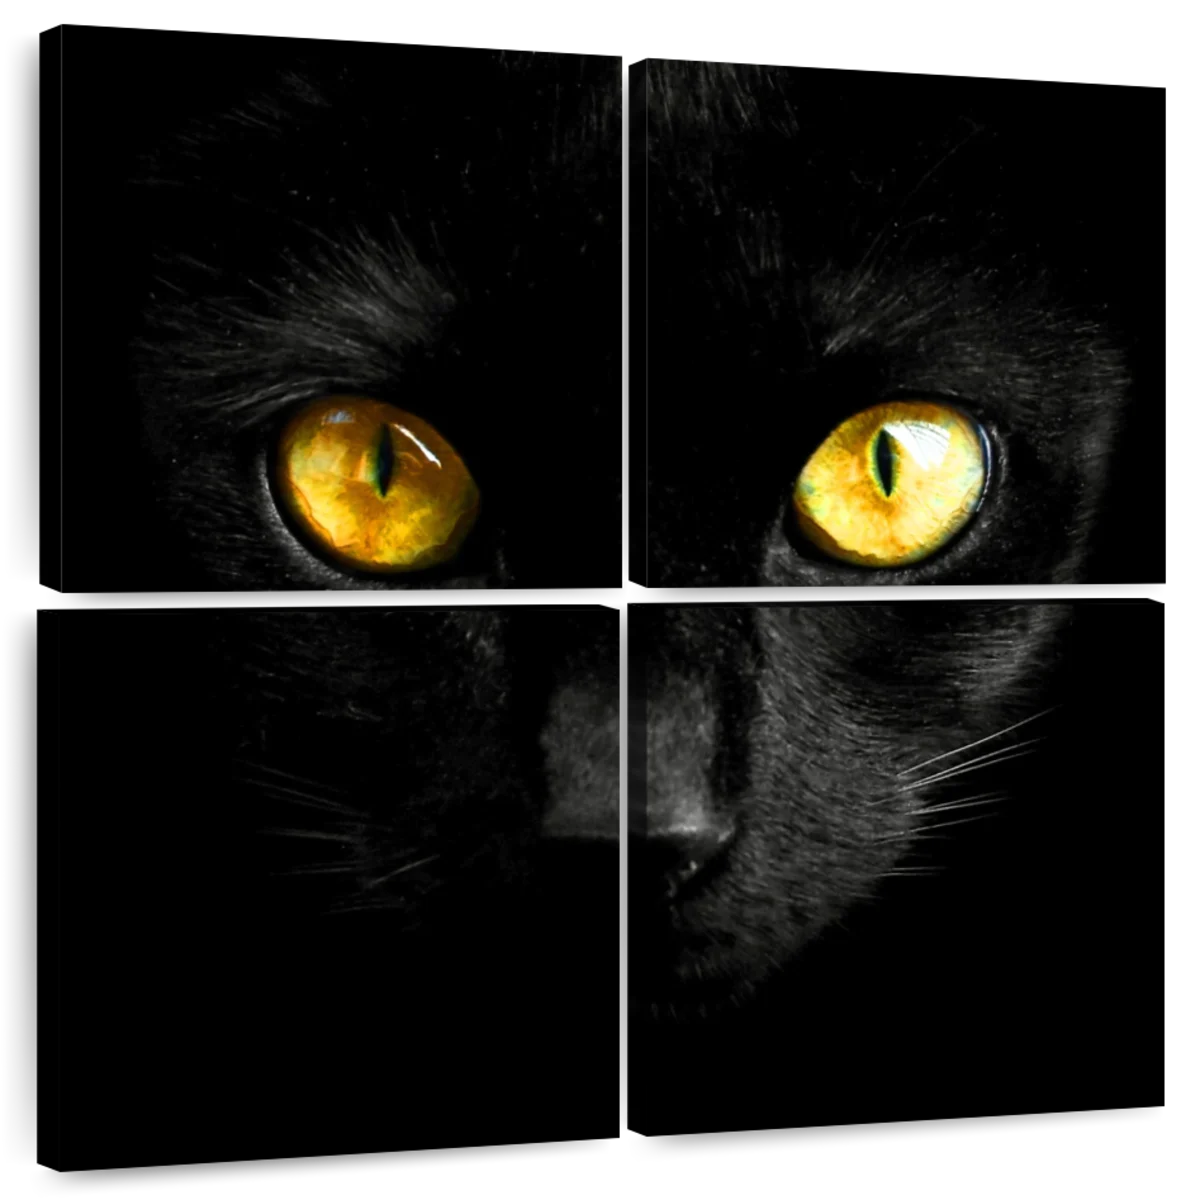 black cat face wallpaper